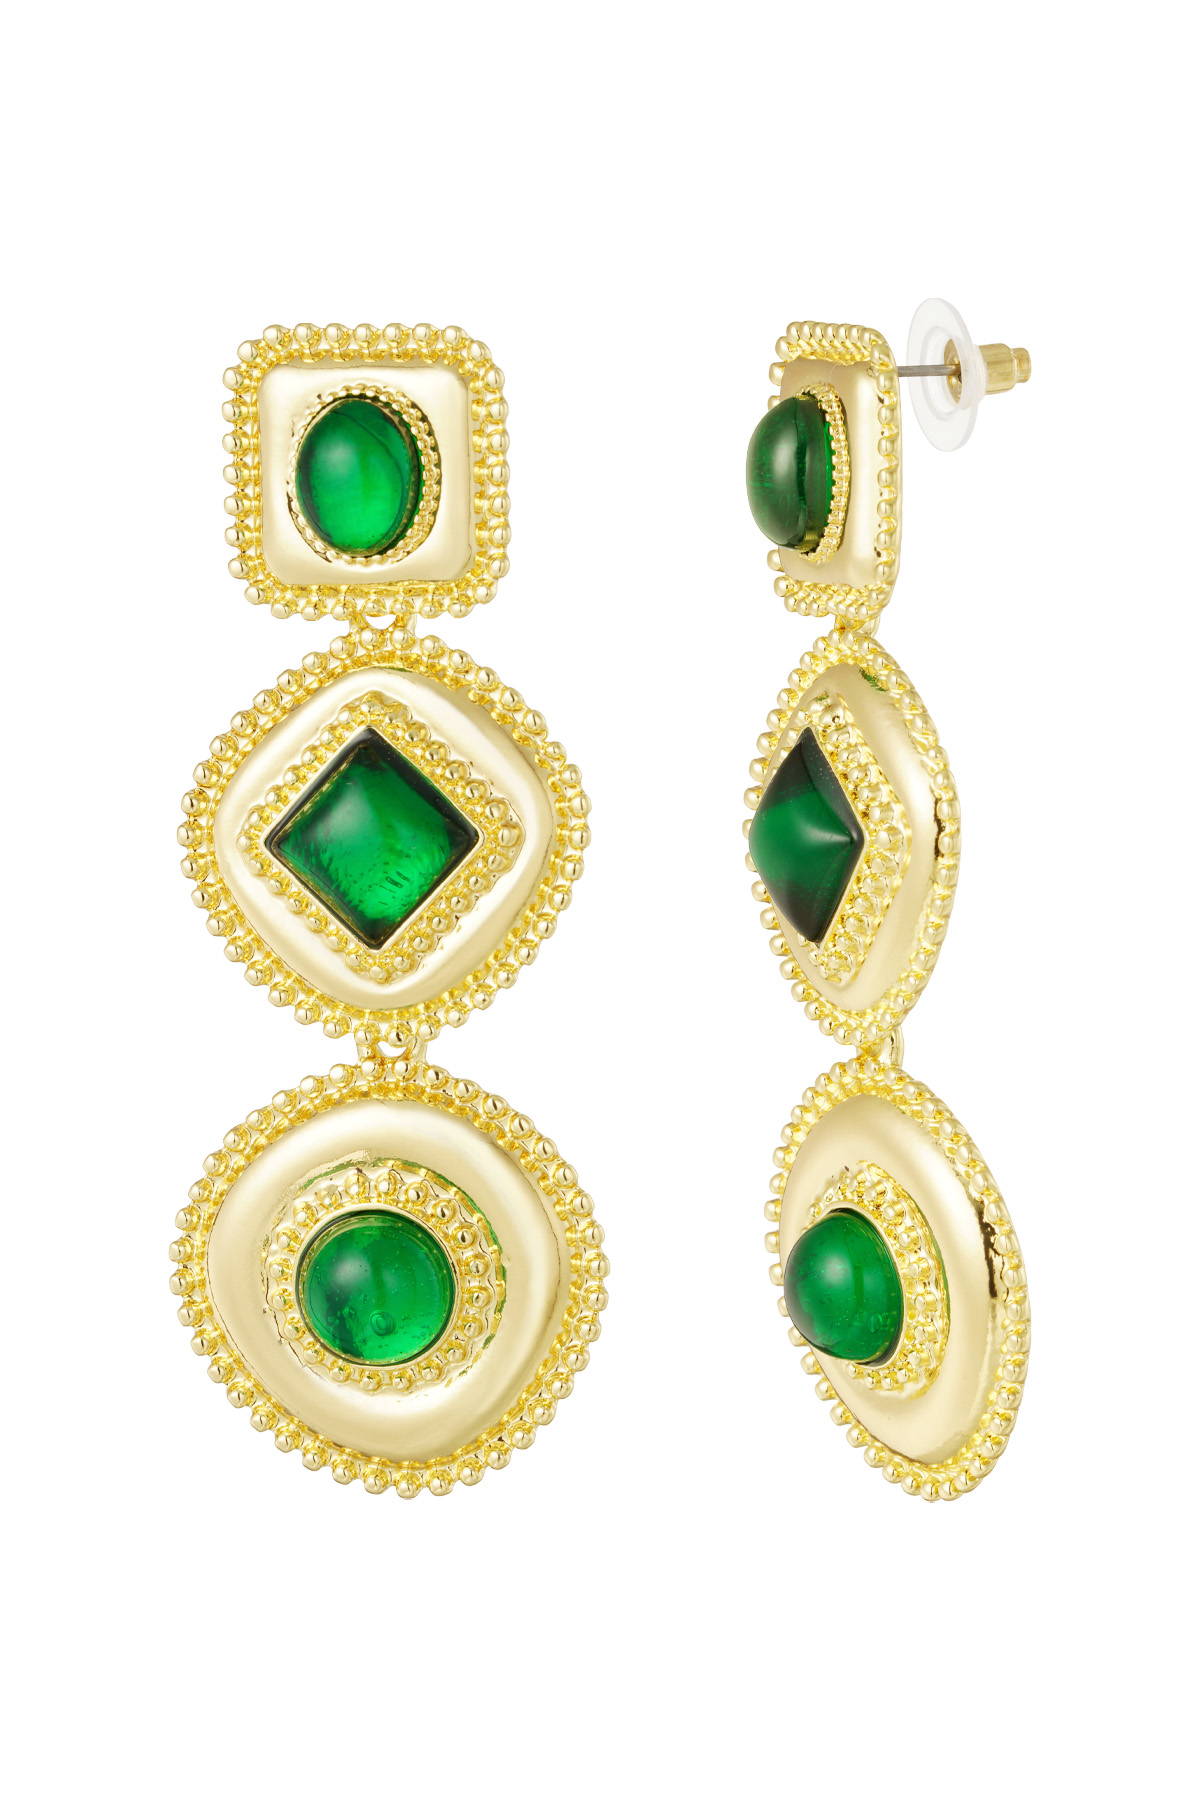 Geometric earrings with stones - green